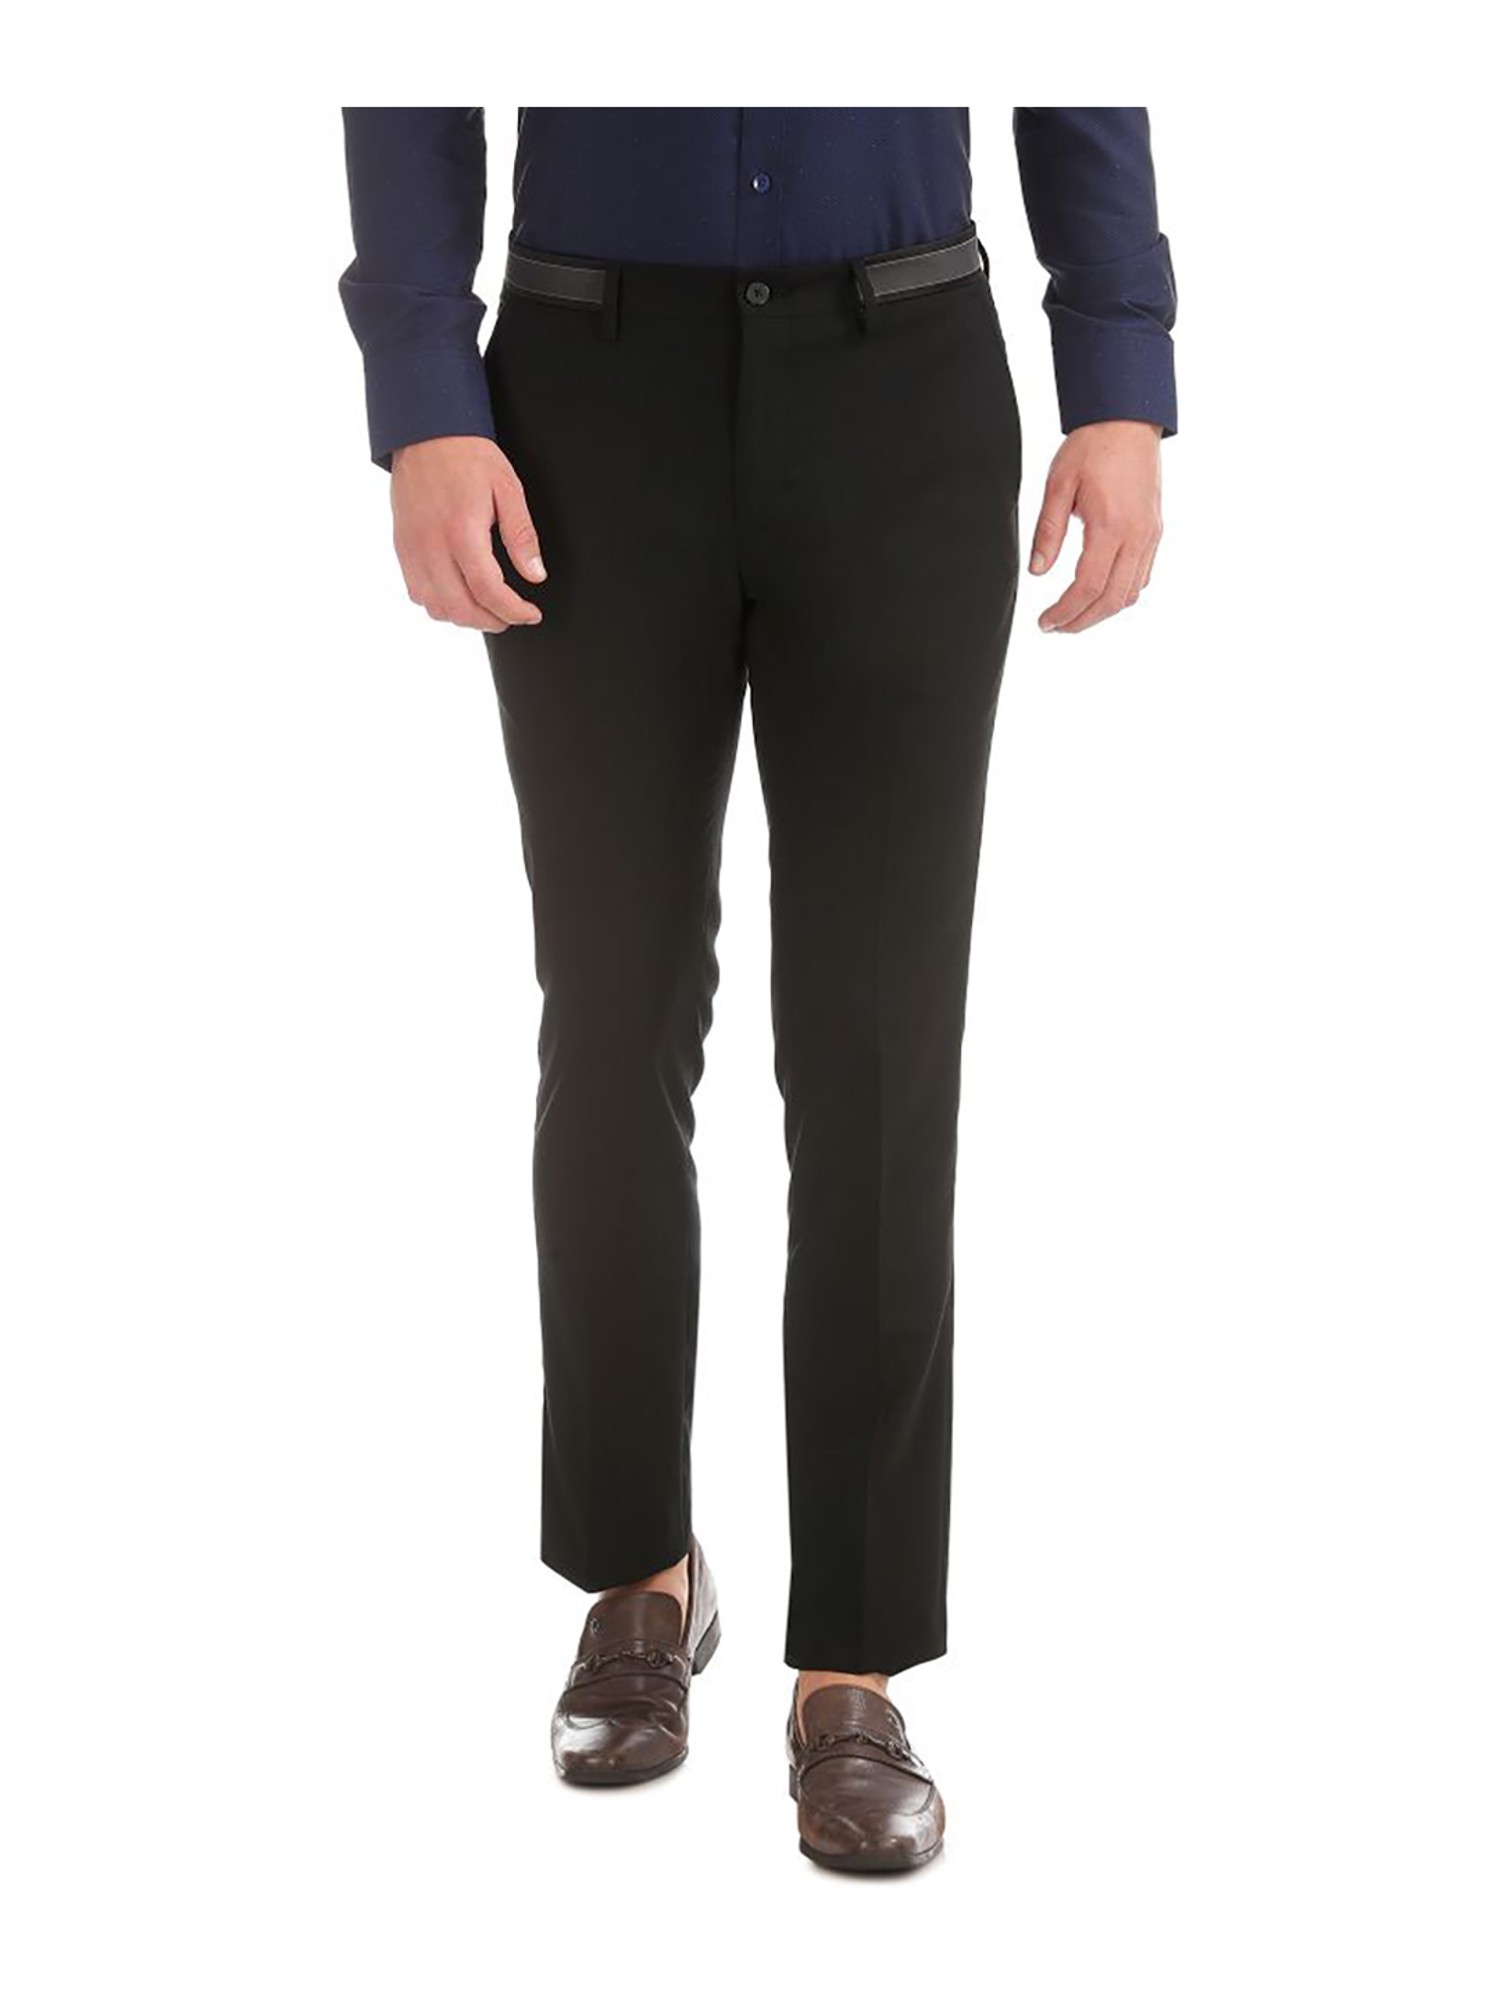 US Polo Association Mens Slim Fit Cotton Formal Trousers  UFTR0084Grey40W x 35L  Amazonin Fashion